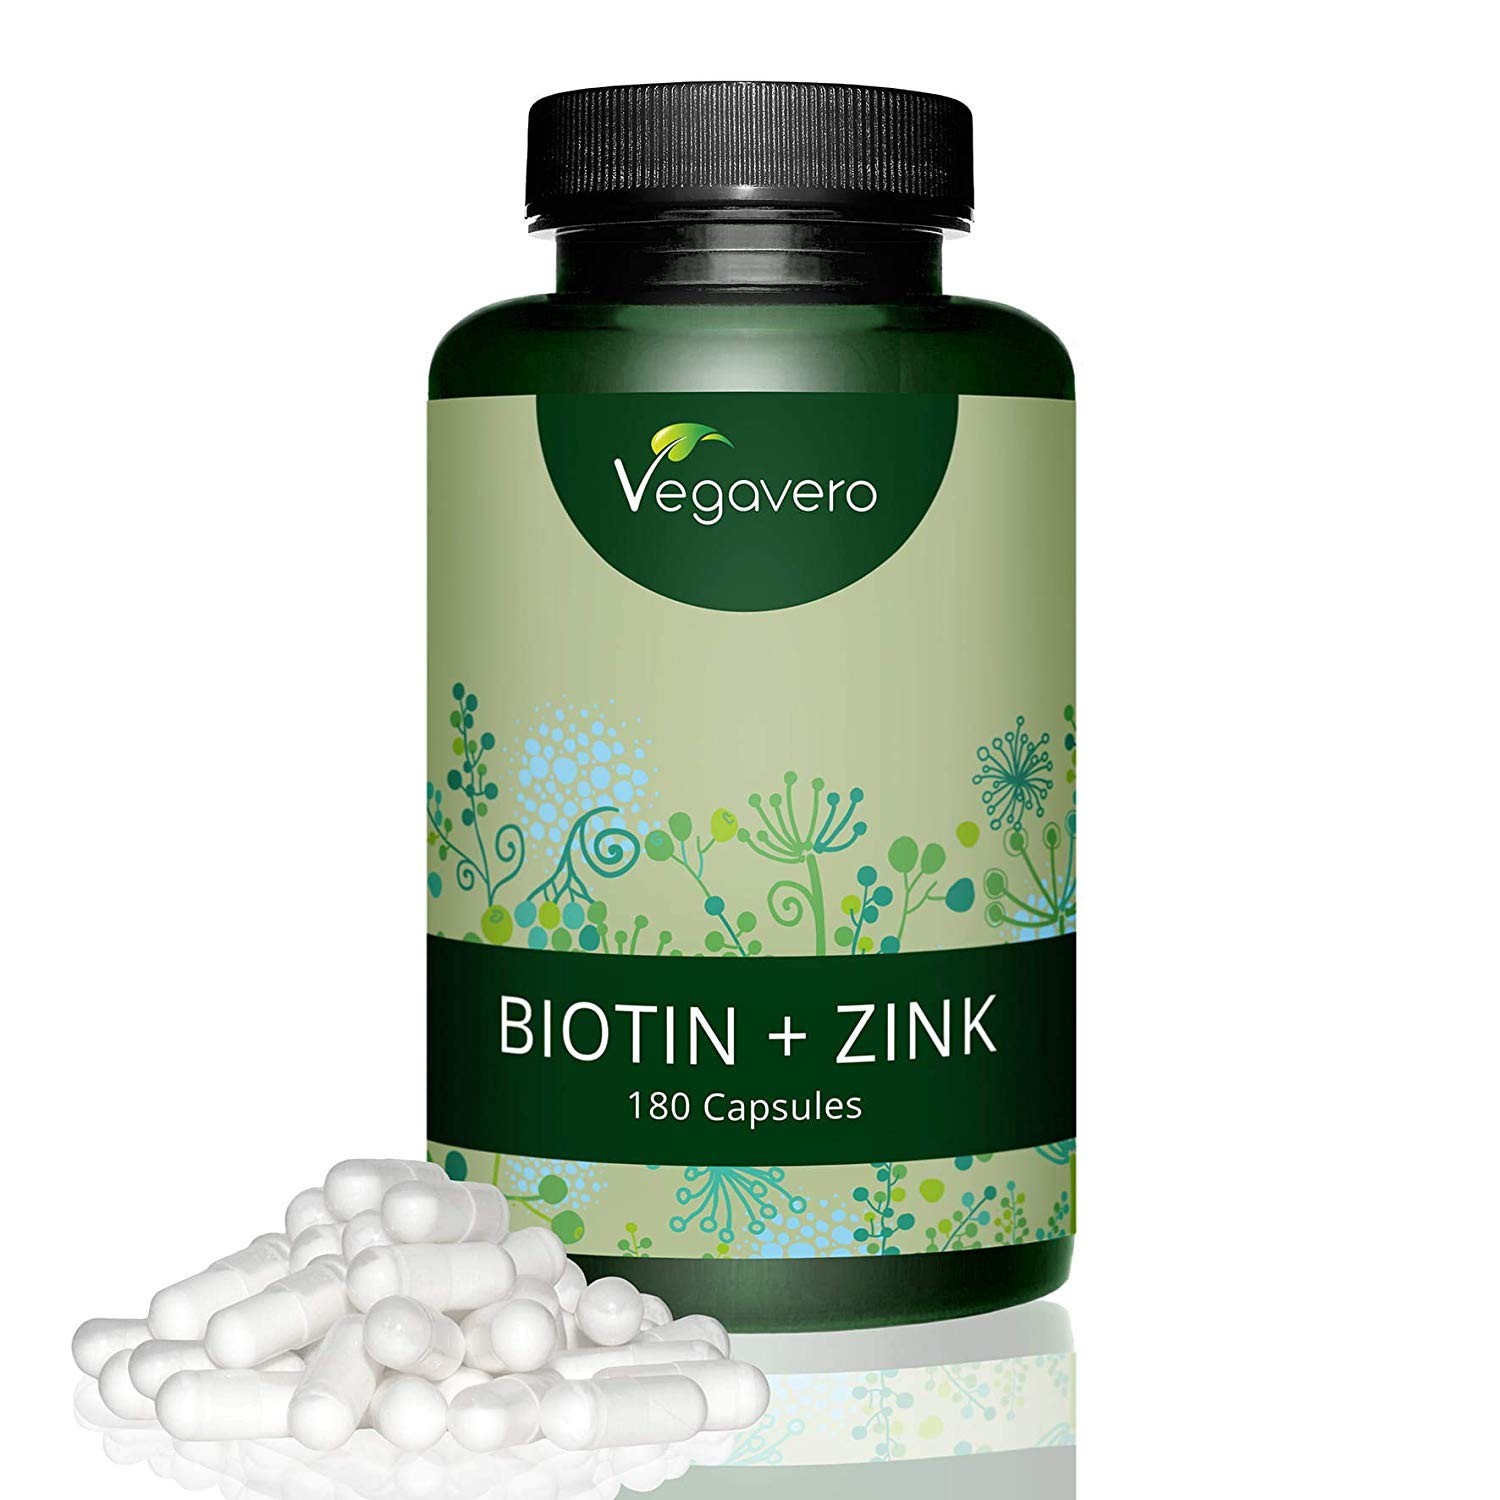 Beneficiile Vitaminei B7 (Biotină)